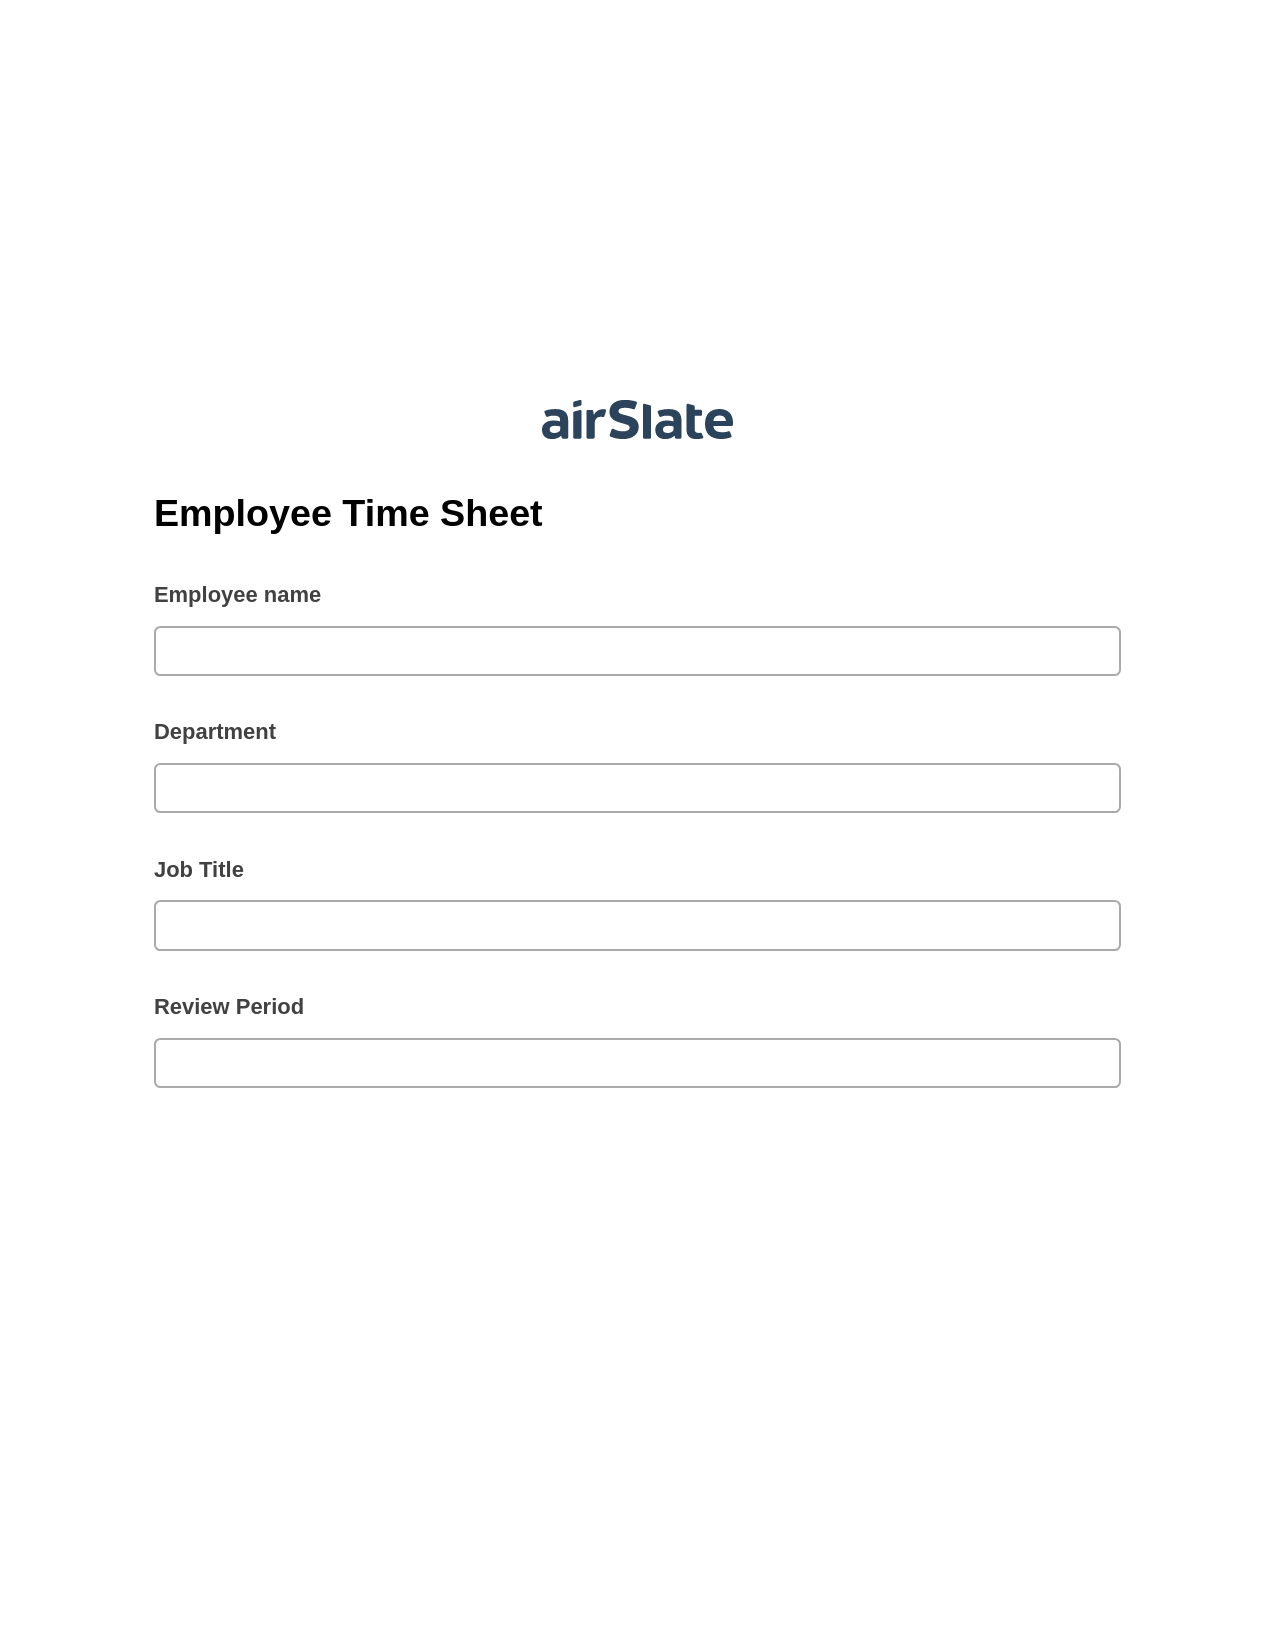 Multirole Employee Time Sheet Pre-fill Dropdowns from CSV file Bot, Create Salesforce Records Bot, Slack Notification Postfinish Bot